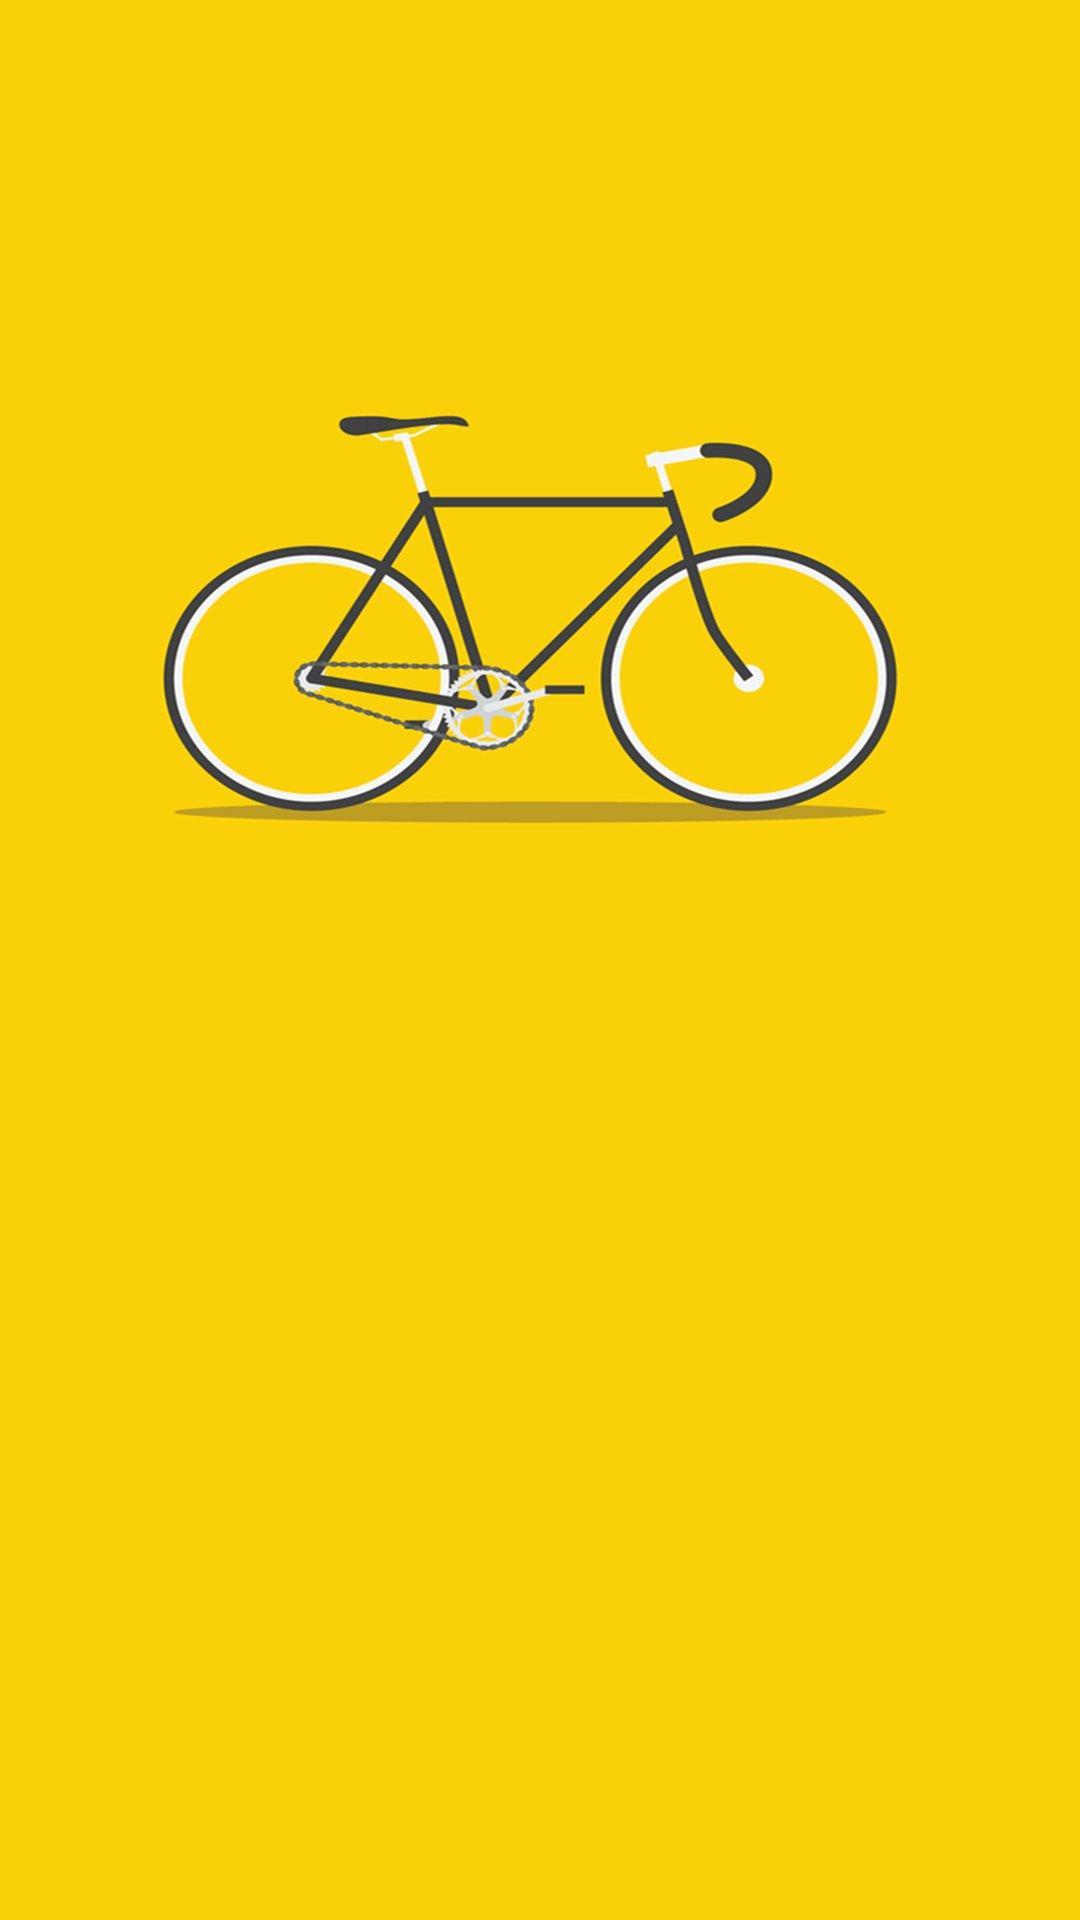 Minimal Bike Wallpapers - Top Free Minimal Bike Backgrounds ...